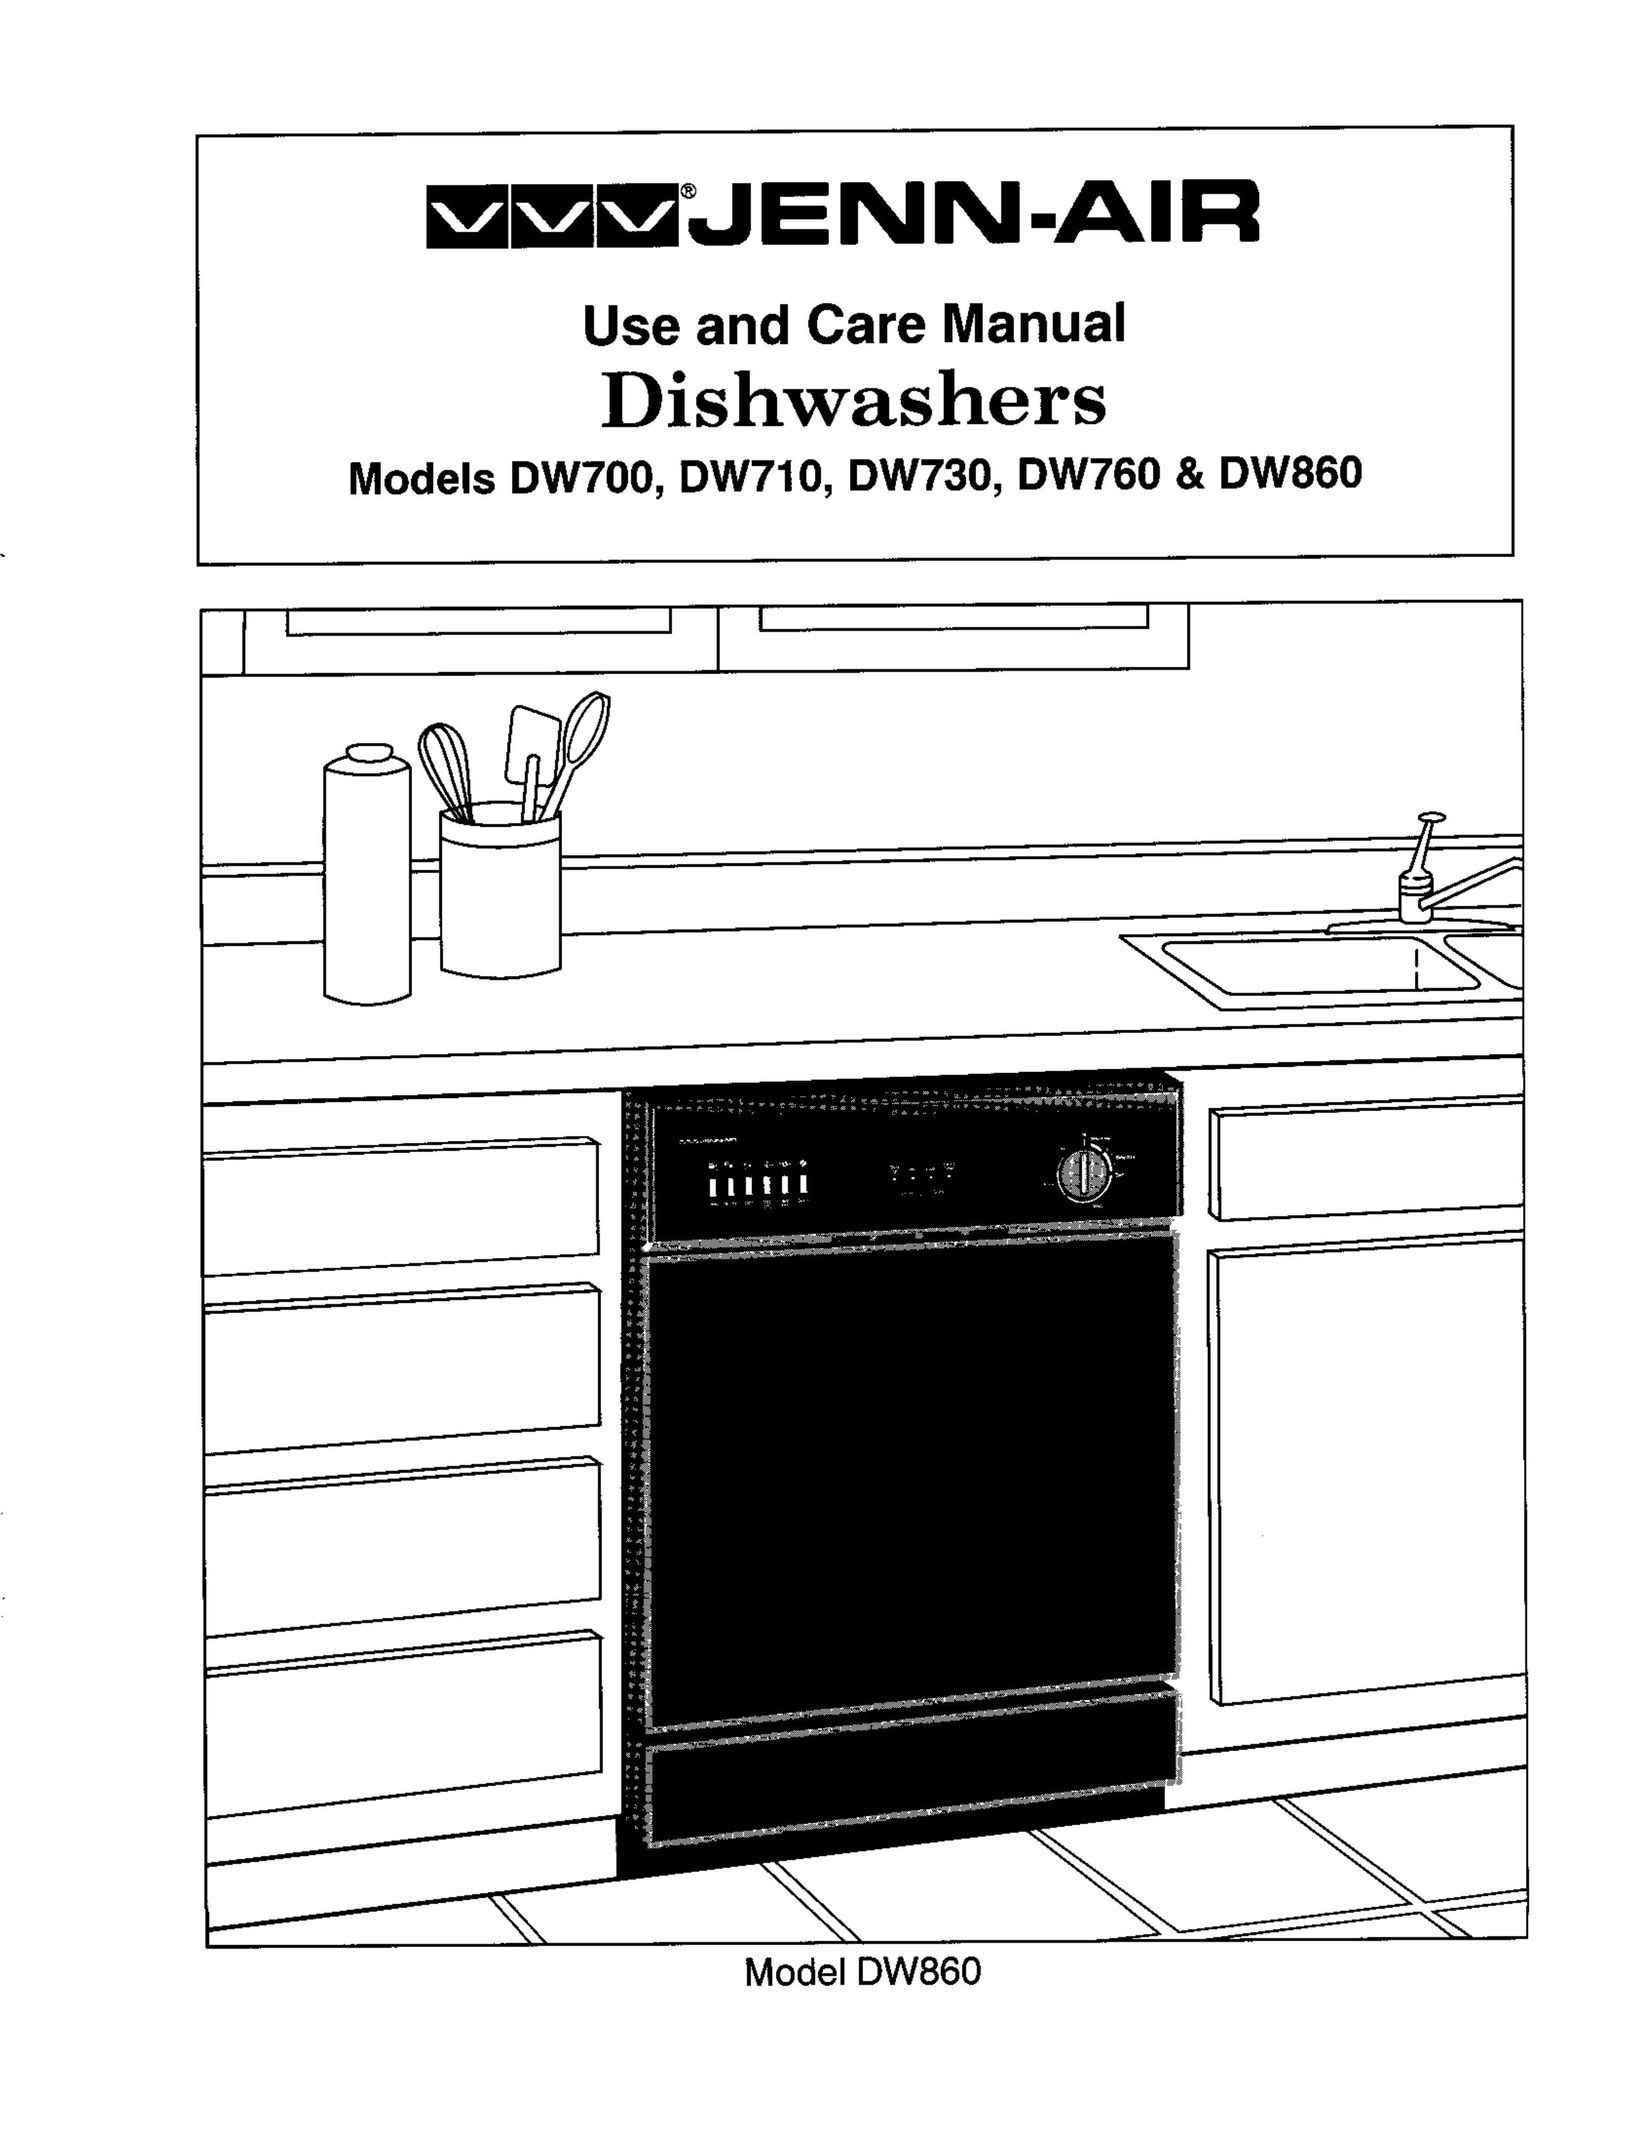 Jenn-Air DW760 Dishwasher User Manual